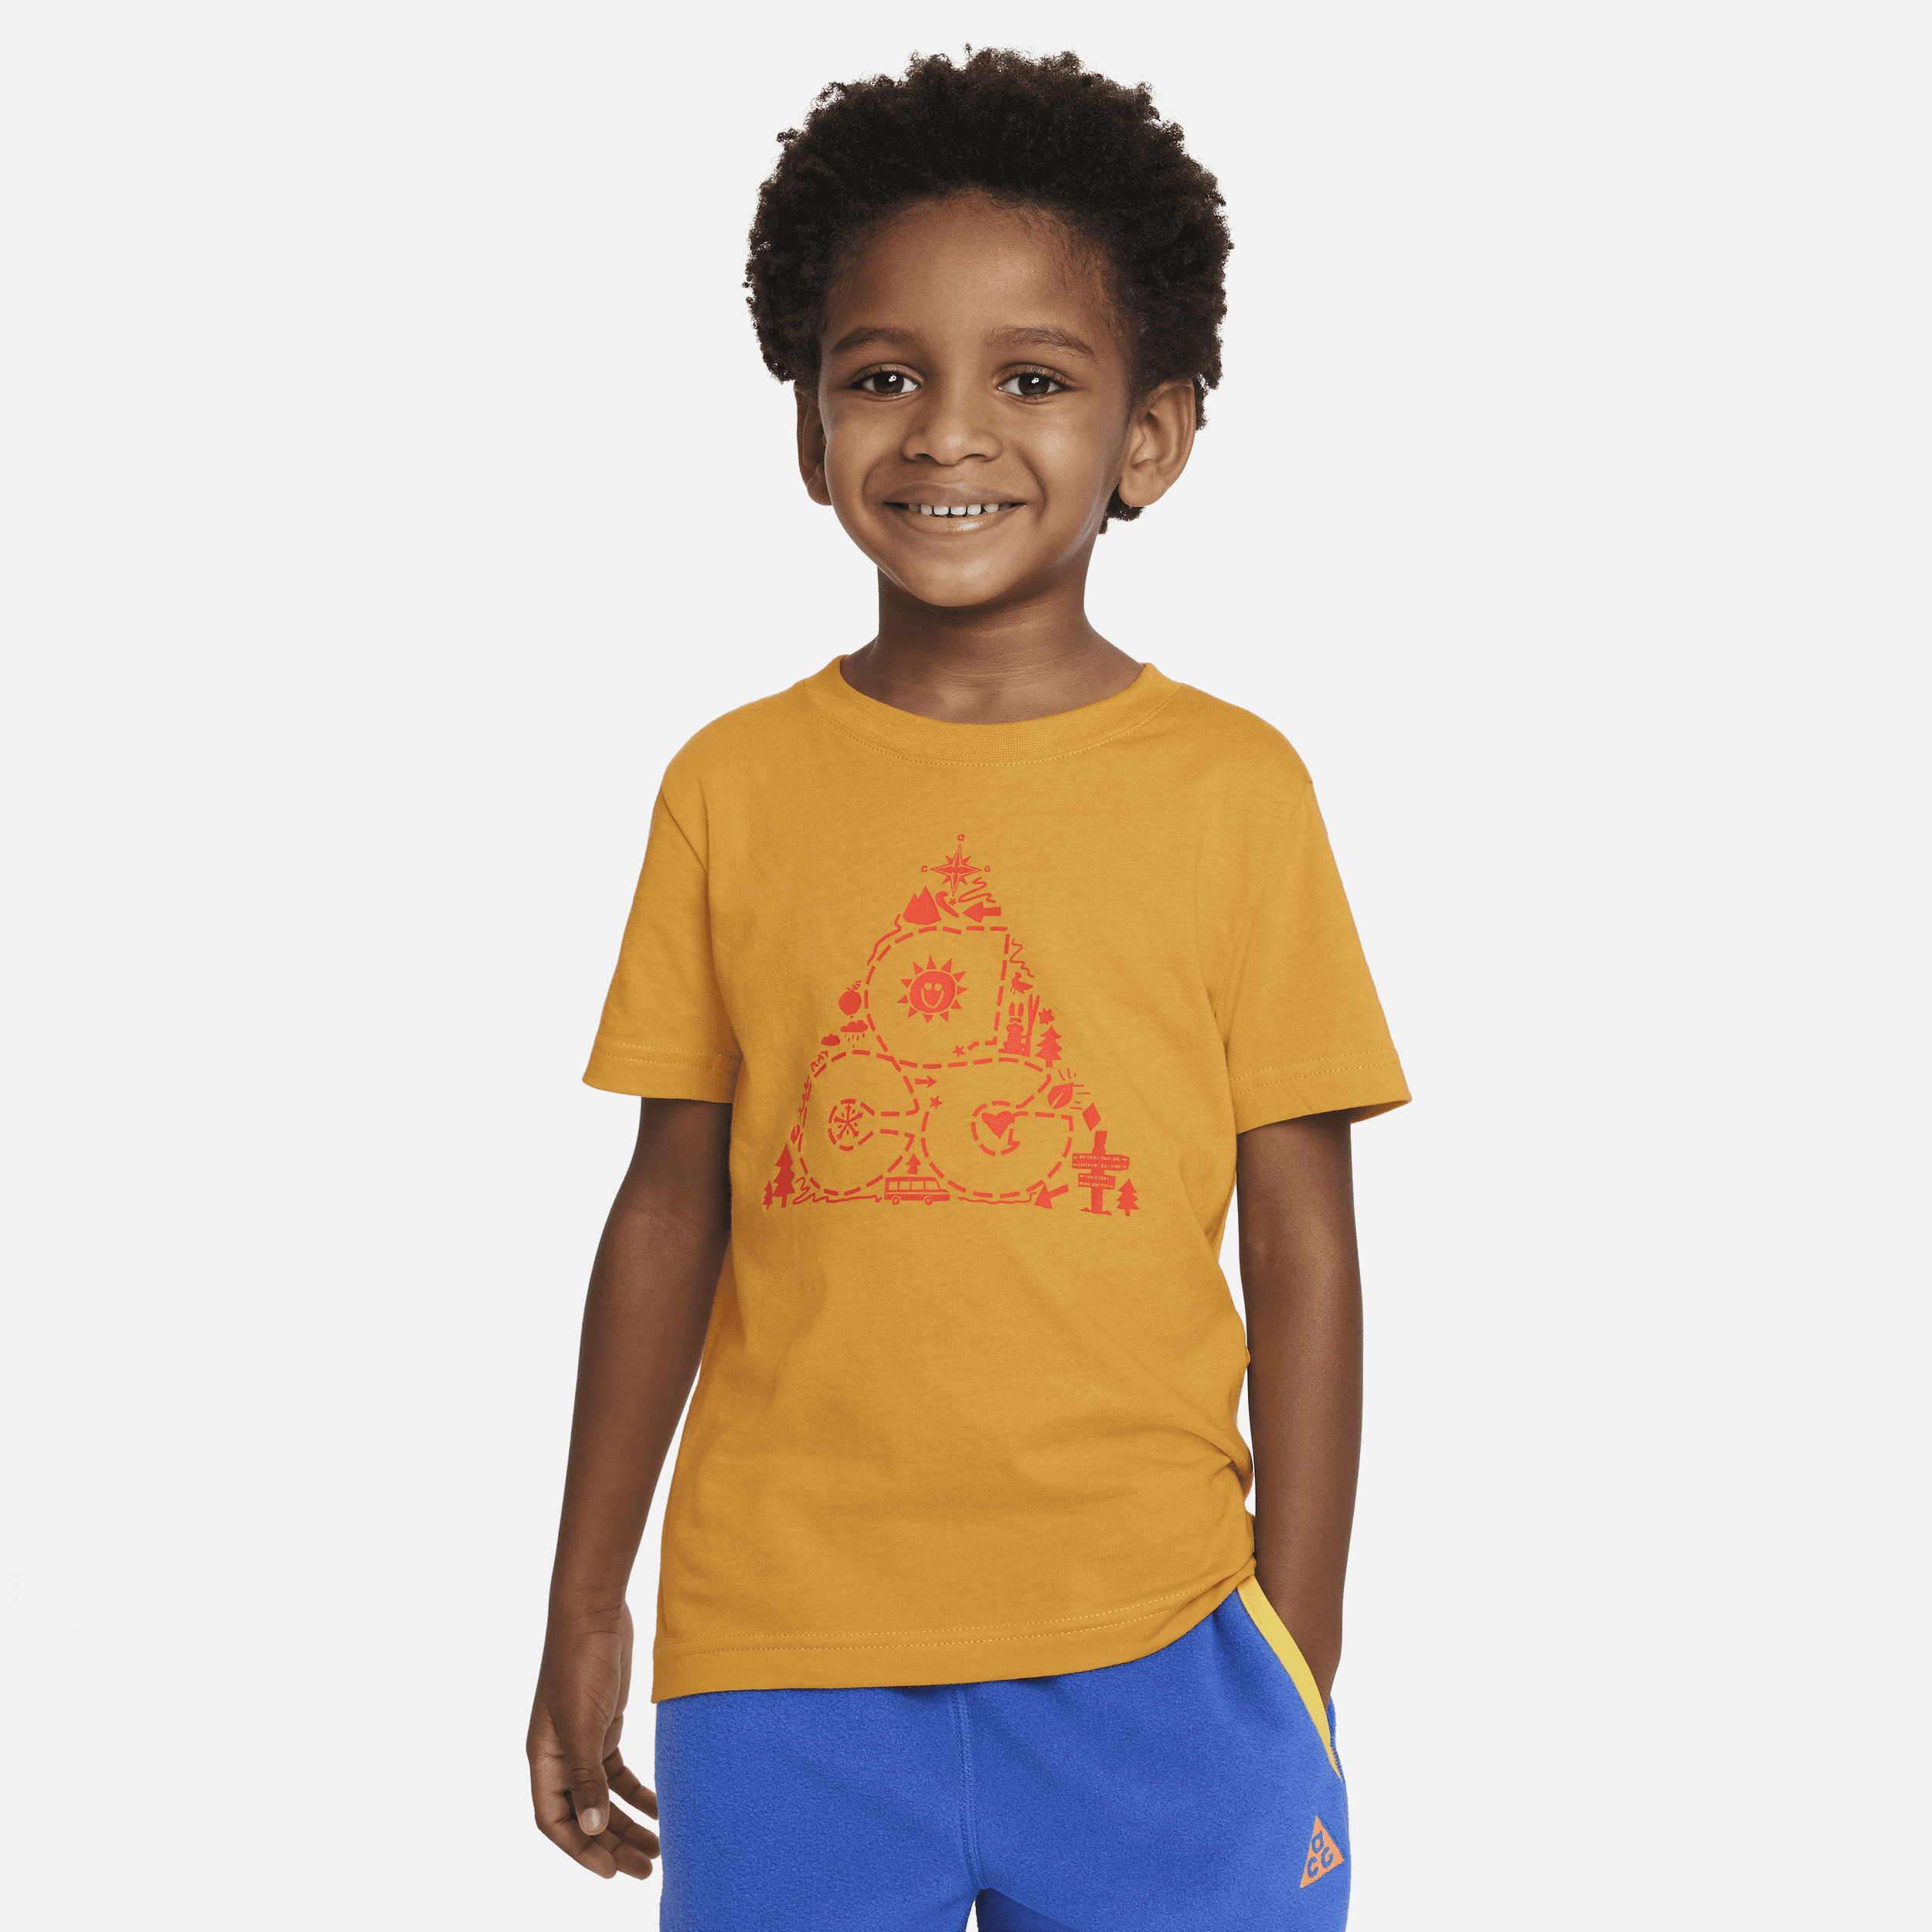 Nike-ACG-T-shirt til mindre børn - gul